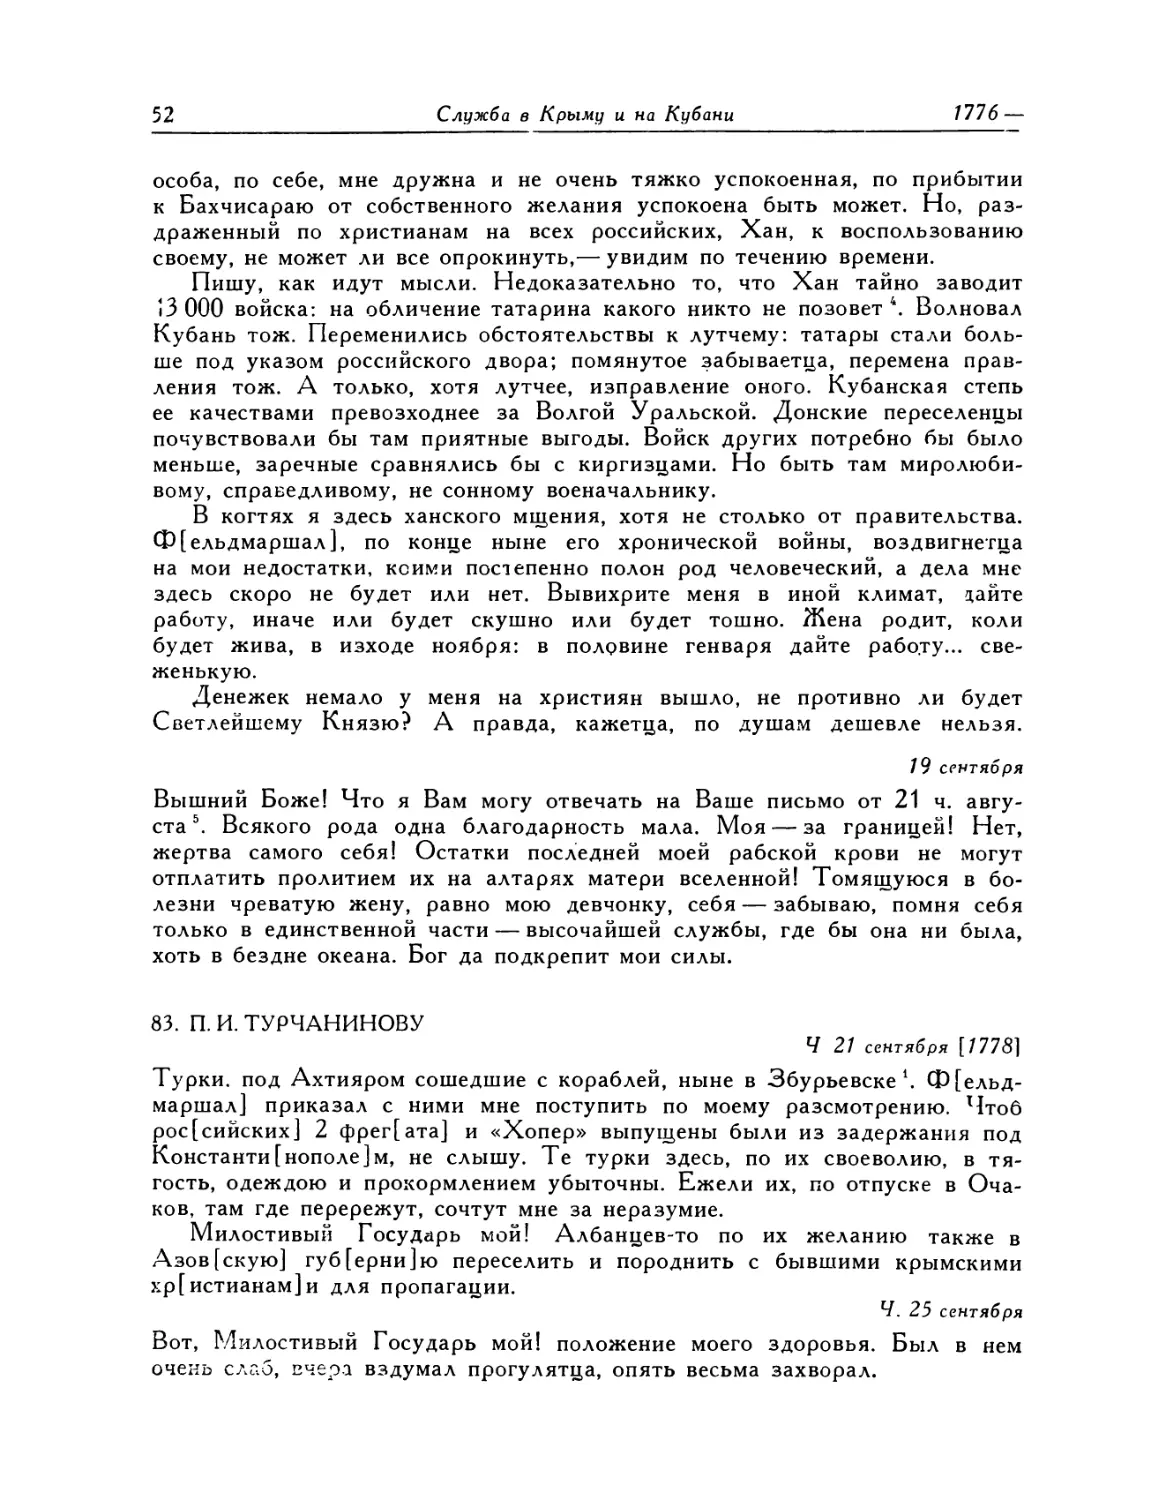 83. П. И. Турчанинову. 21.IX—3.Х.1778